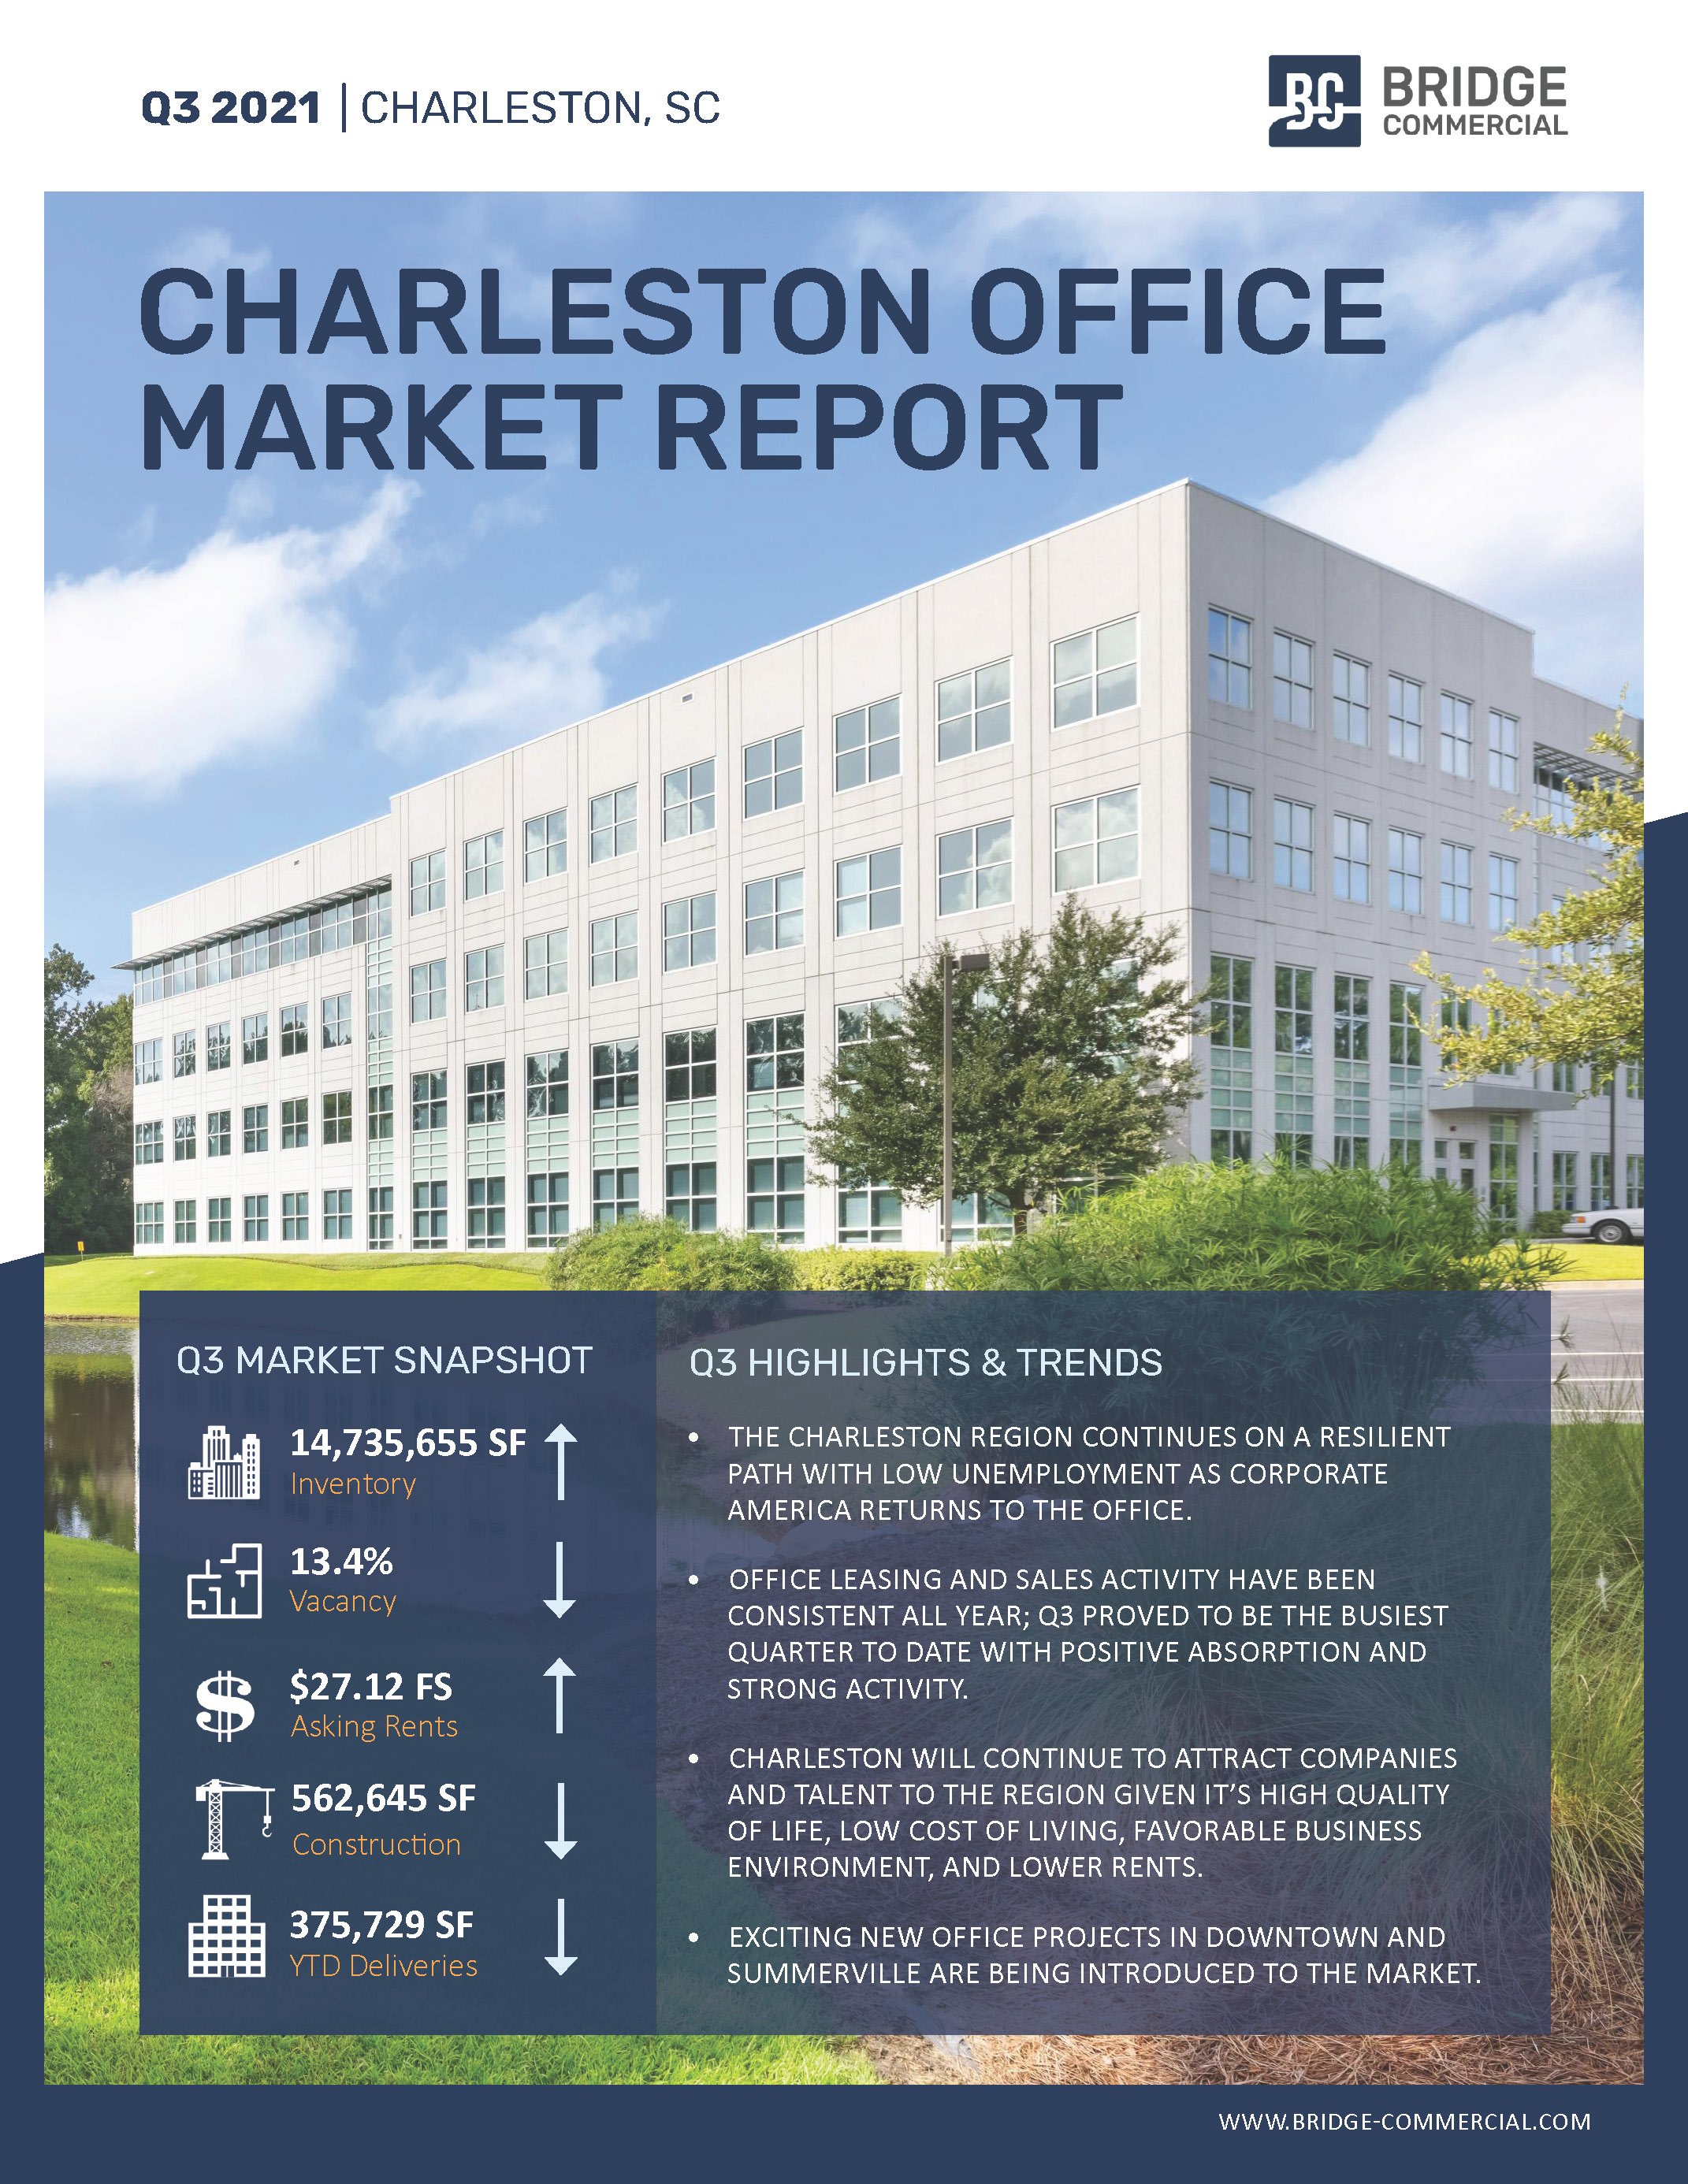 Q3 2021 Charleston Office Market Report_Bridge Commercial_Page_1.jpg